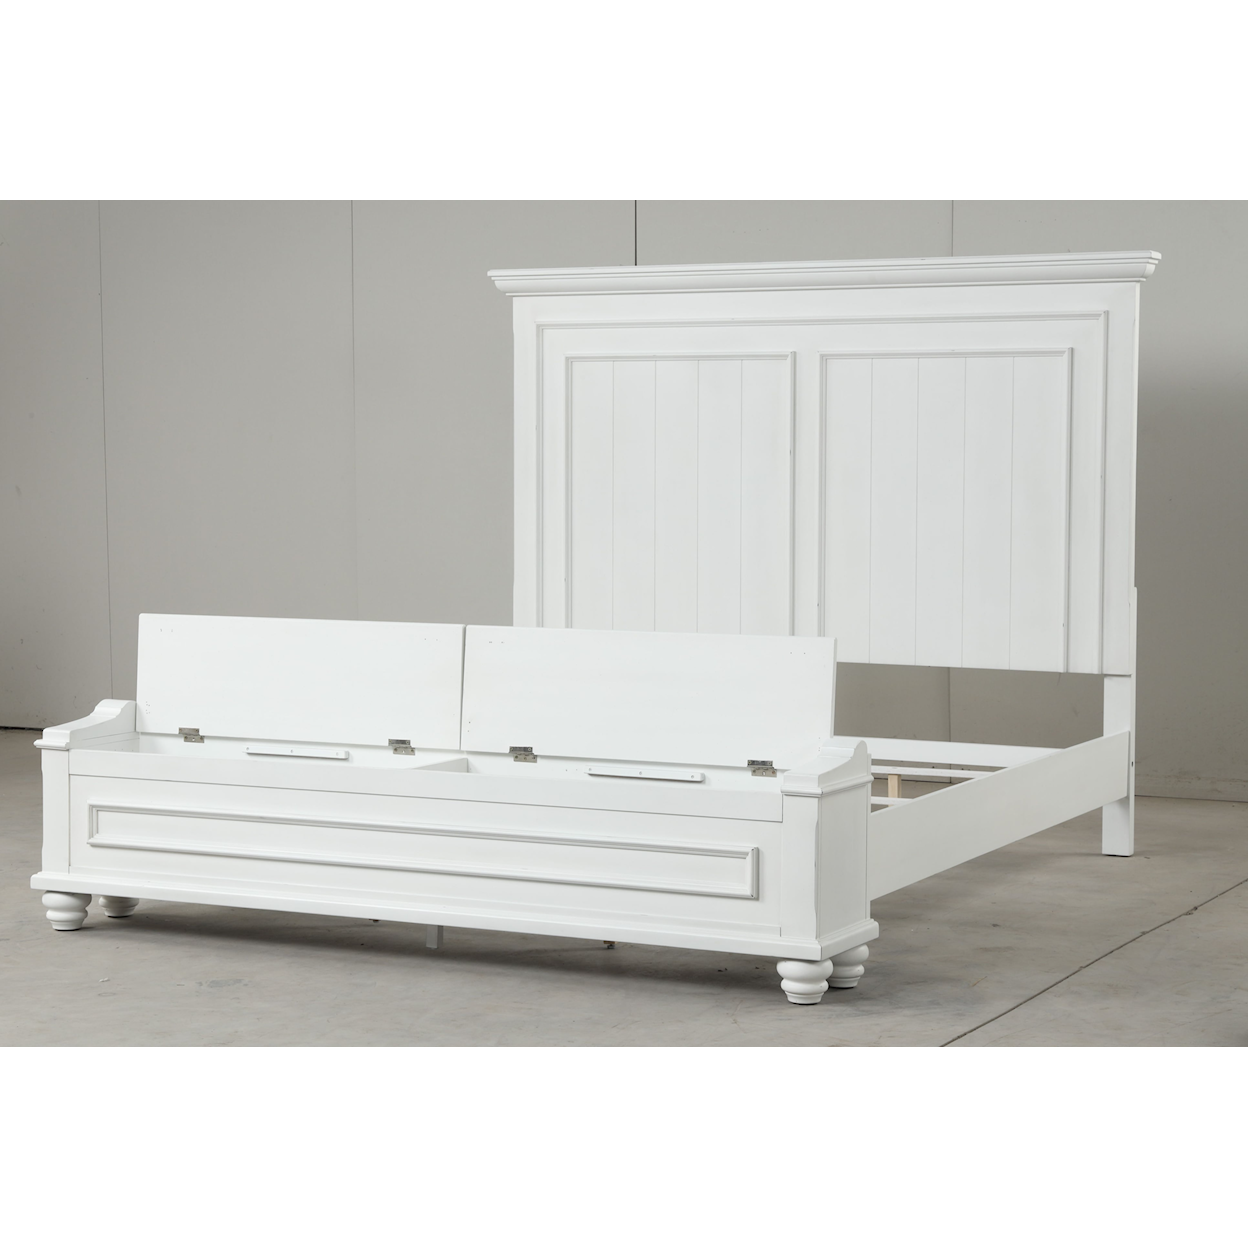 Alex's Furniture 8465A Queen Panel Storage Bed